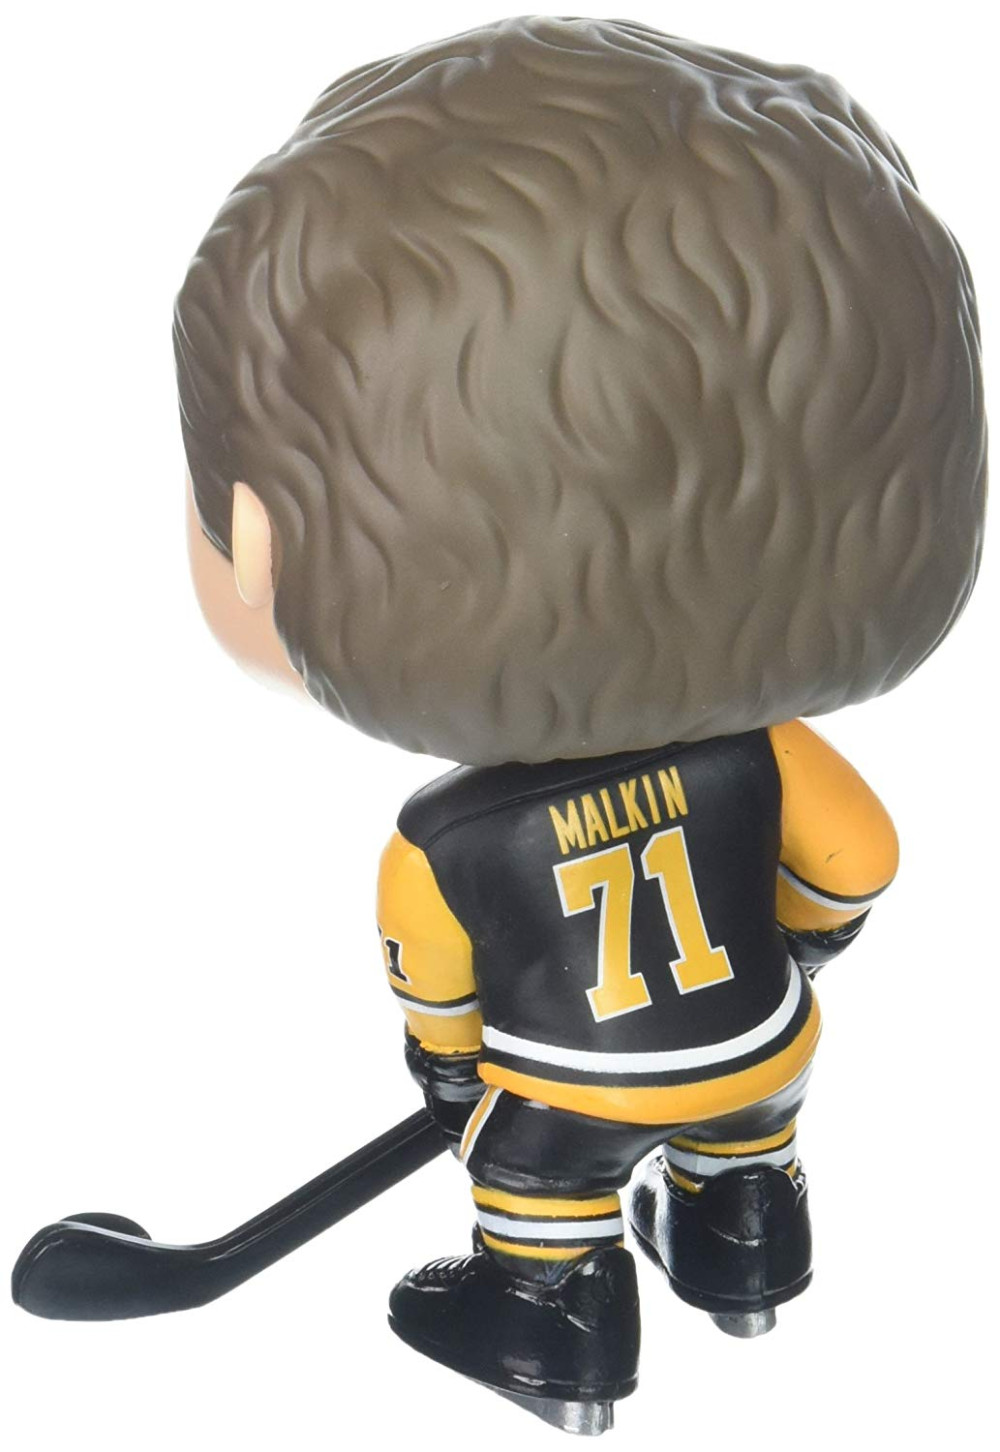  Funko POP Hockey: NHL Pittsburgh Penguins  Evgeni Malkin (9,5 )